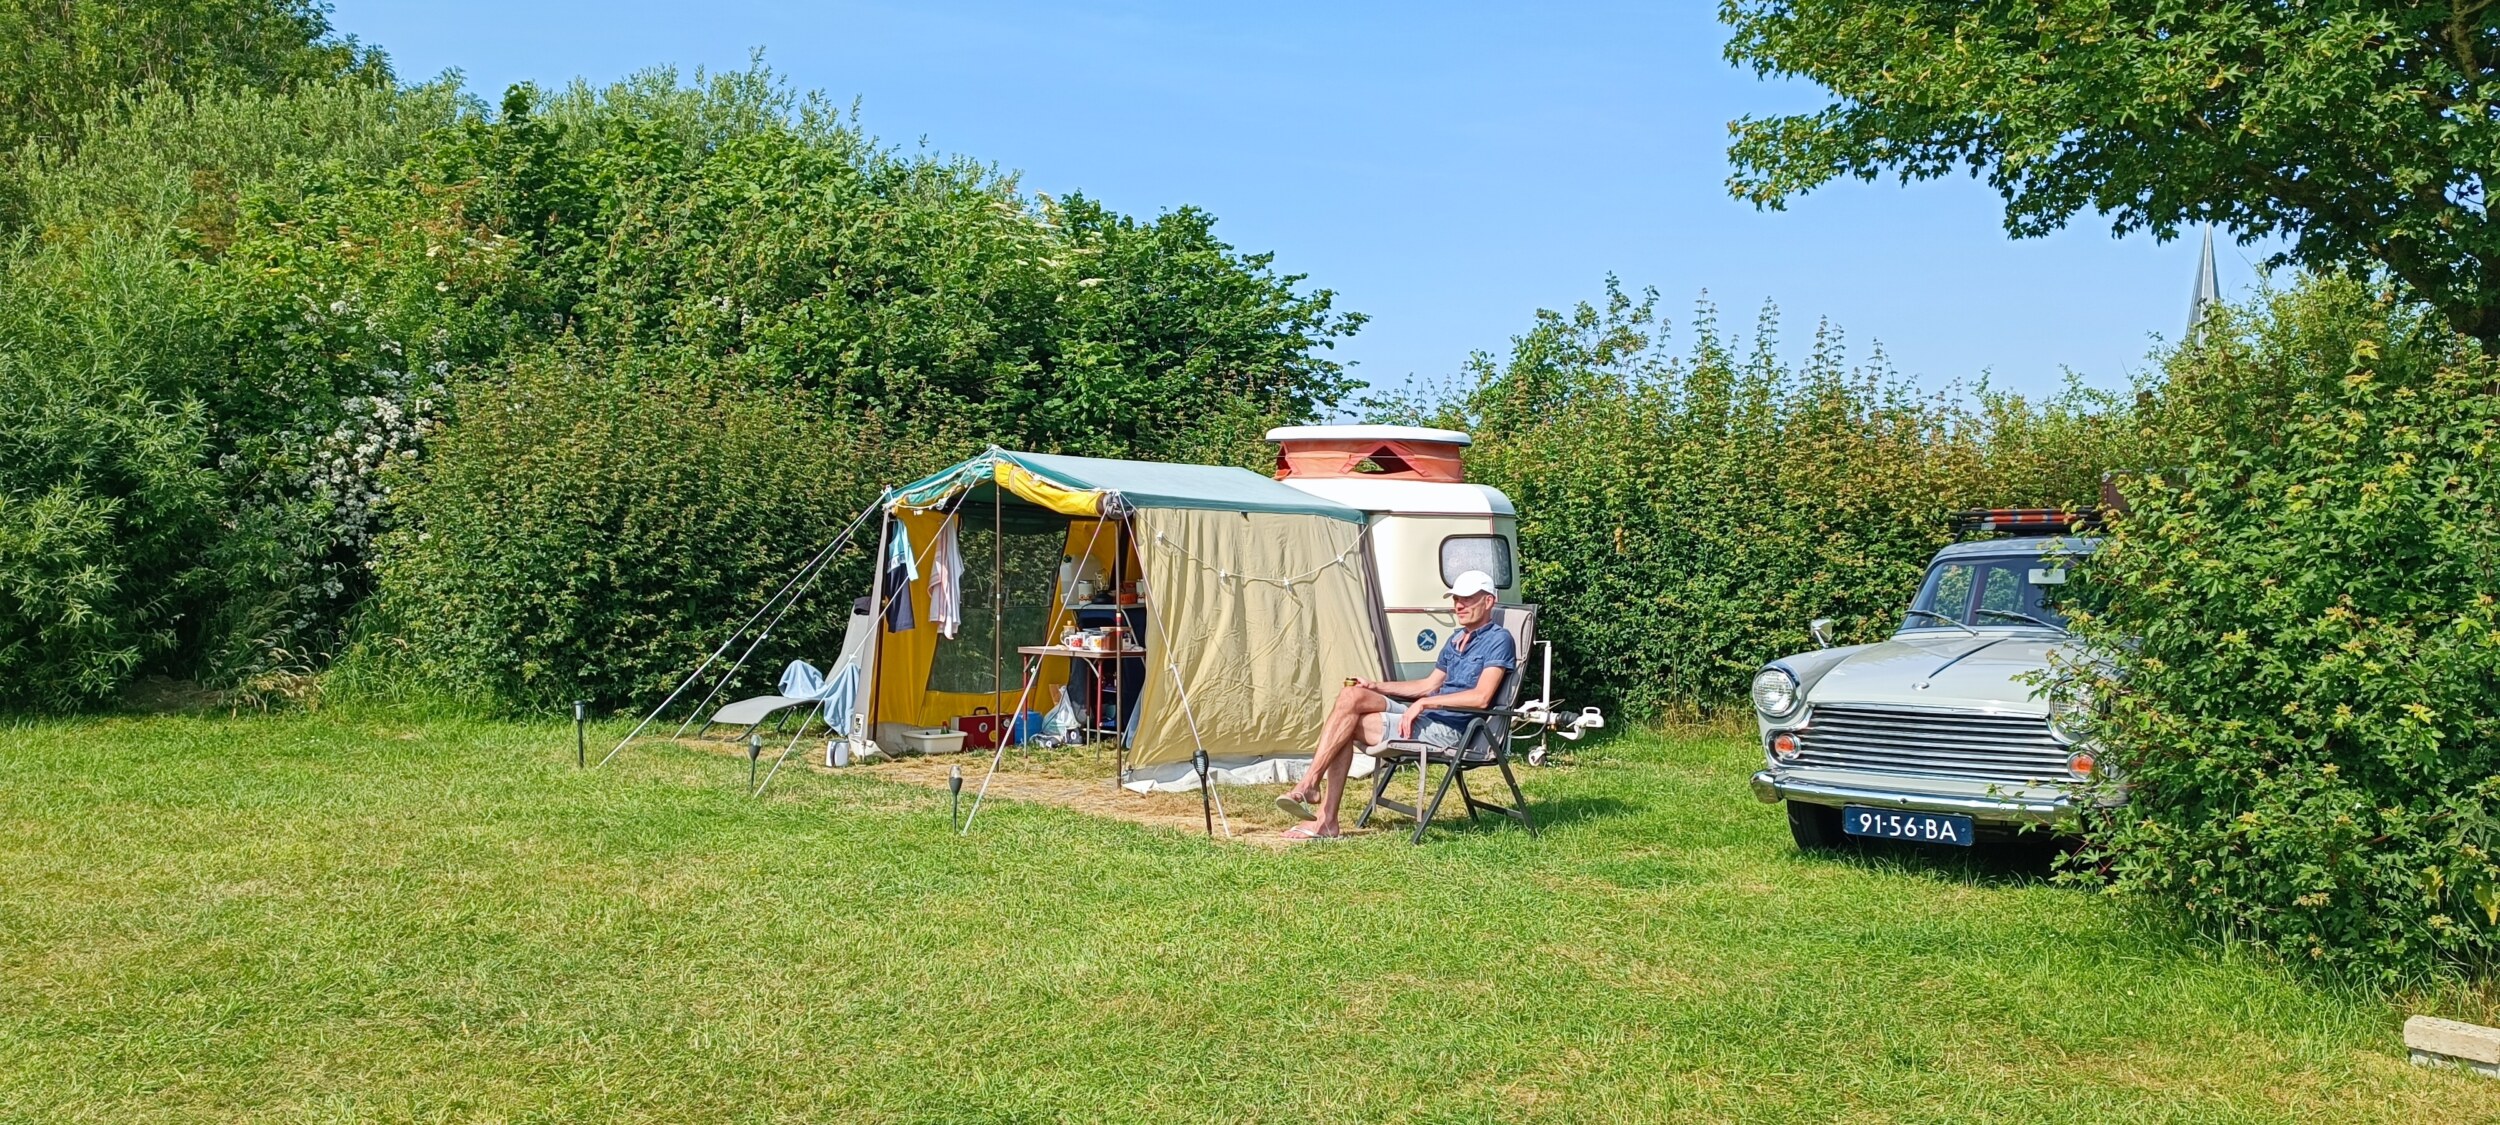 Camping nabij Bolsward